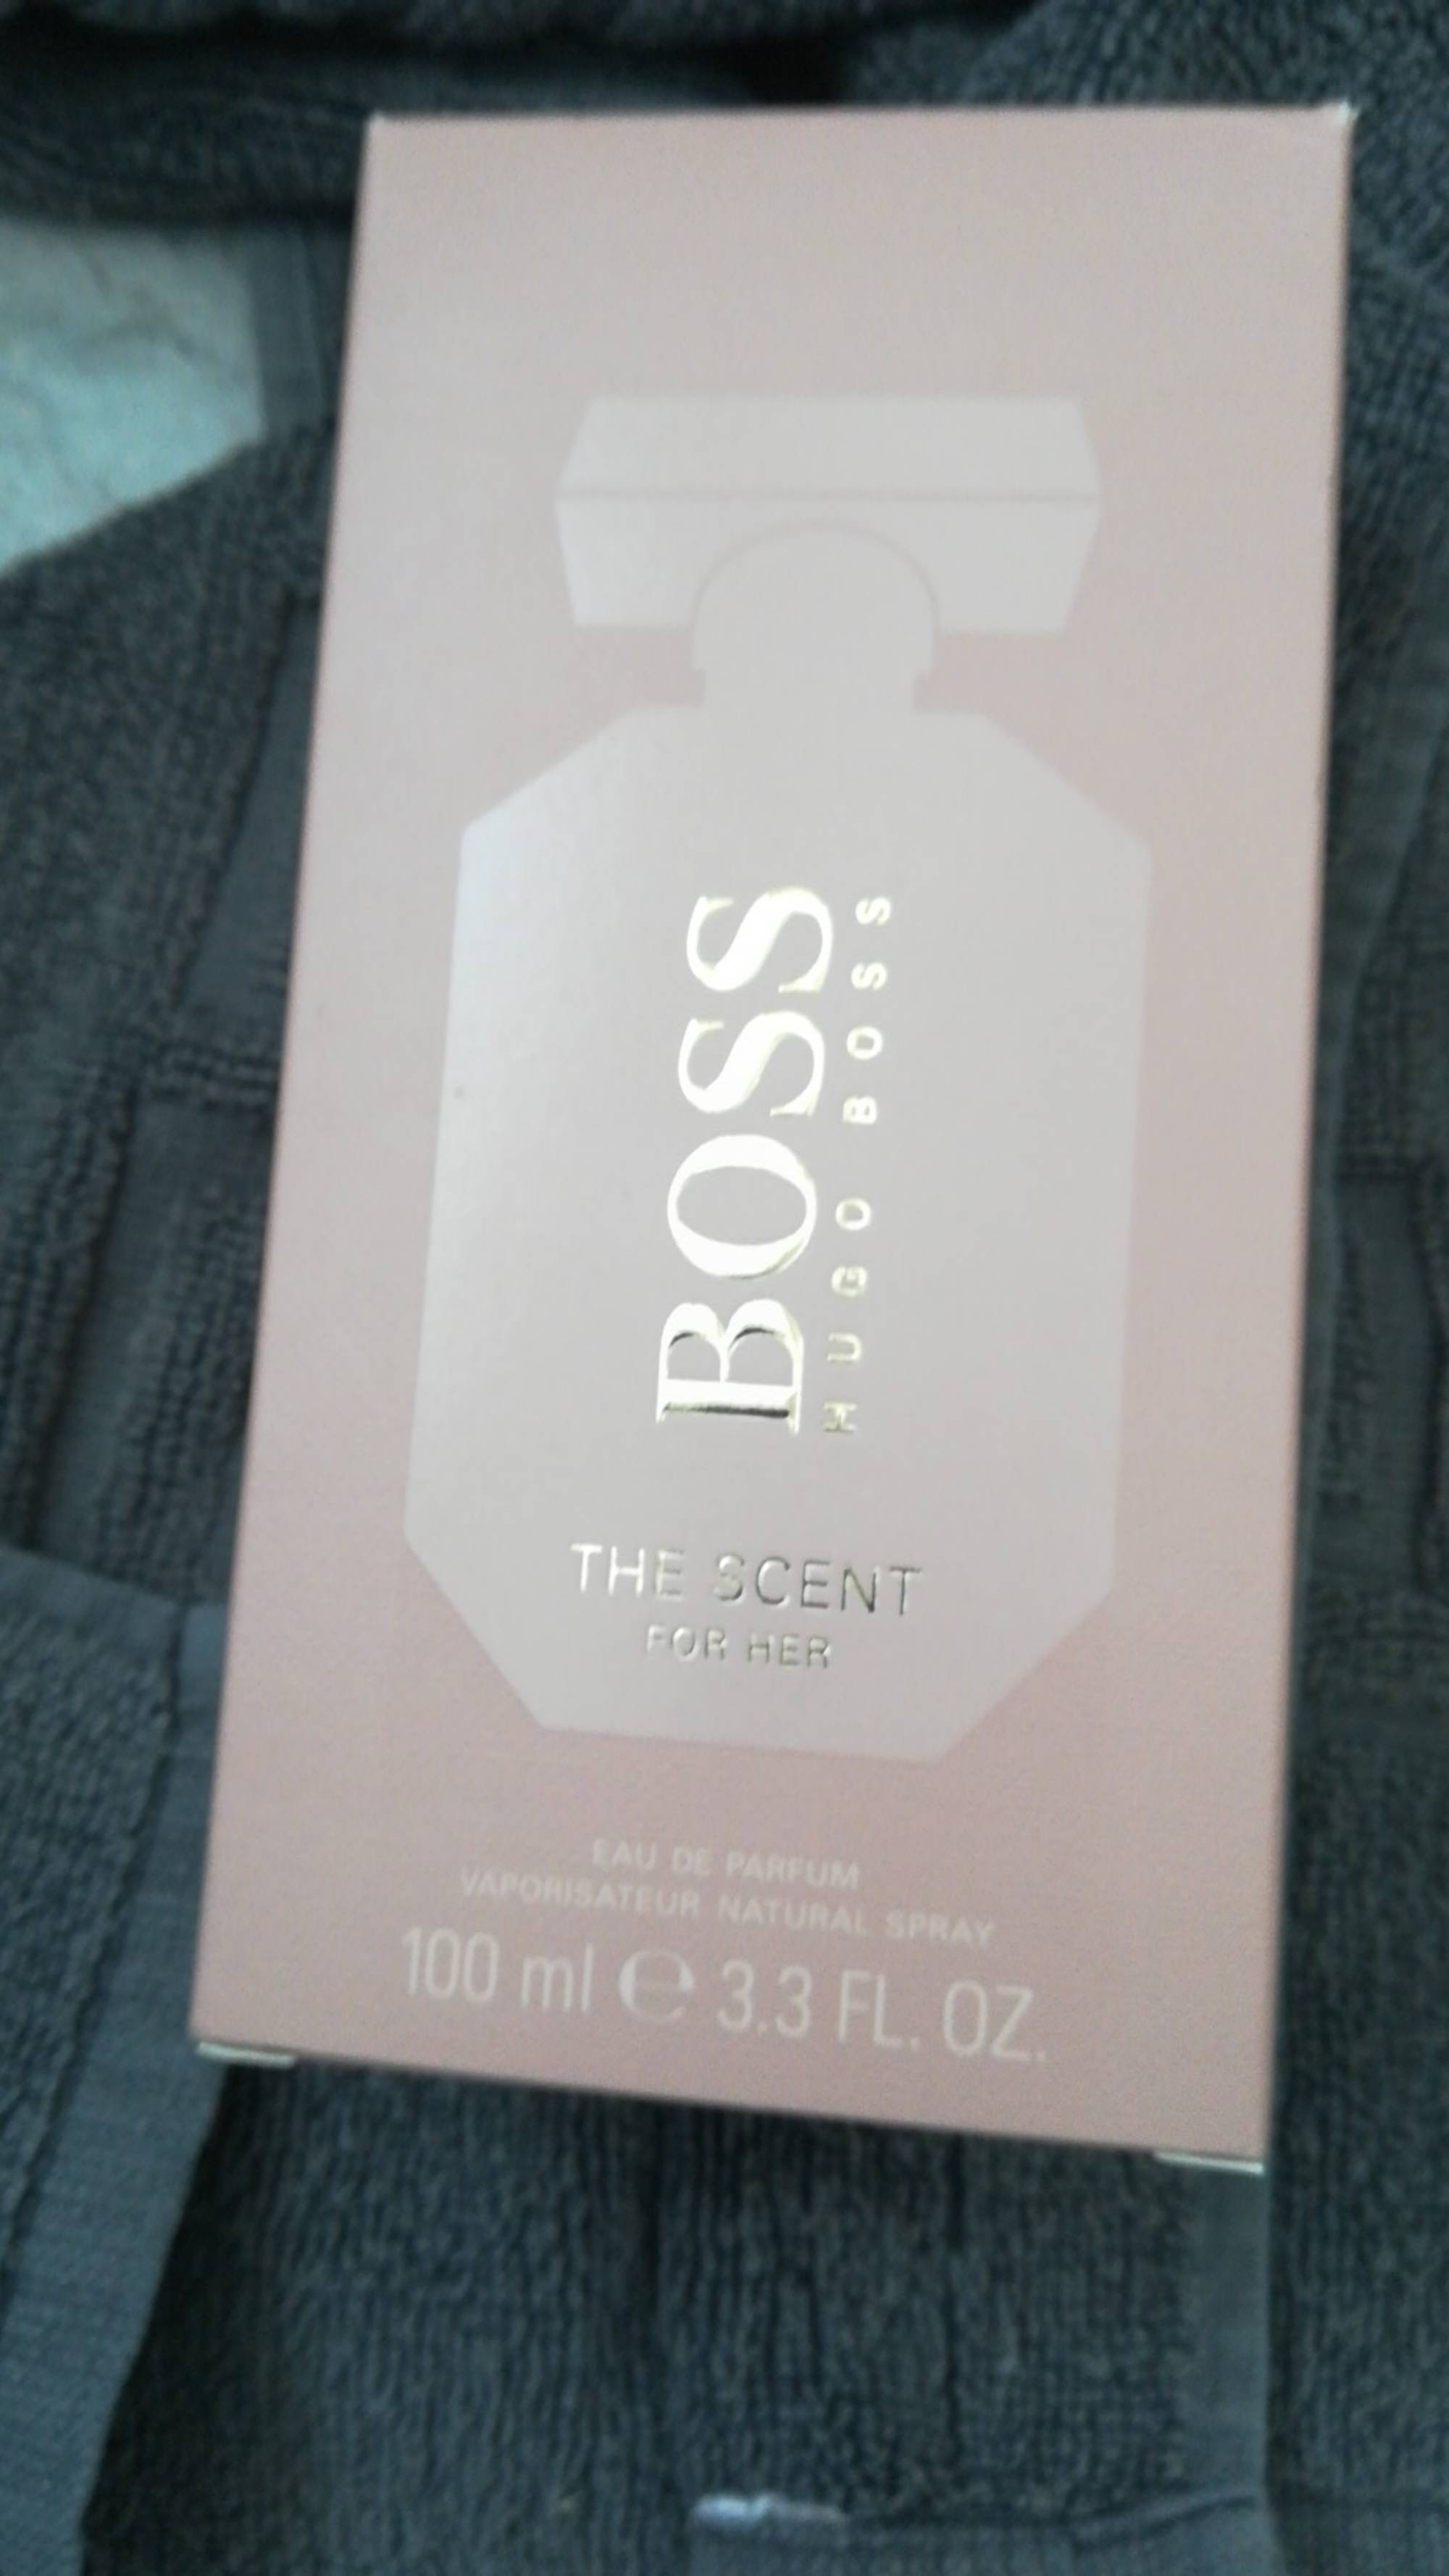 HUGO BOSS - The scent for her - Eau de parfum